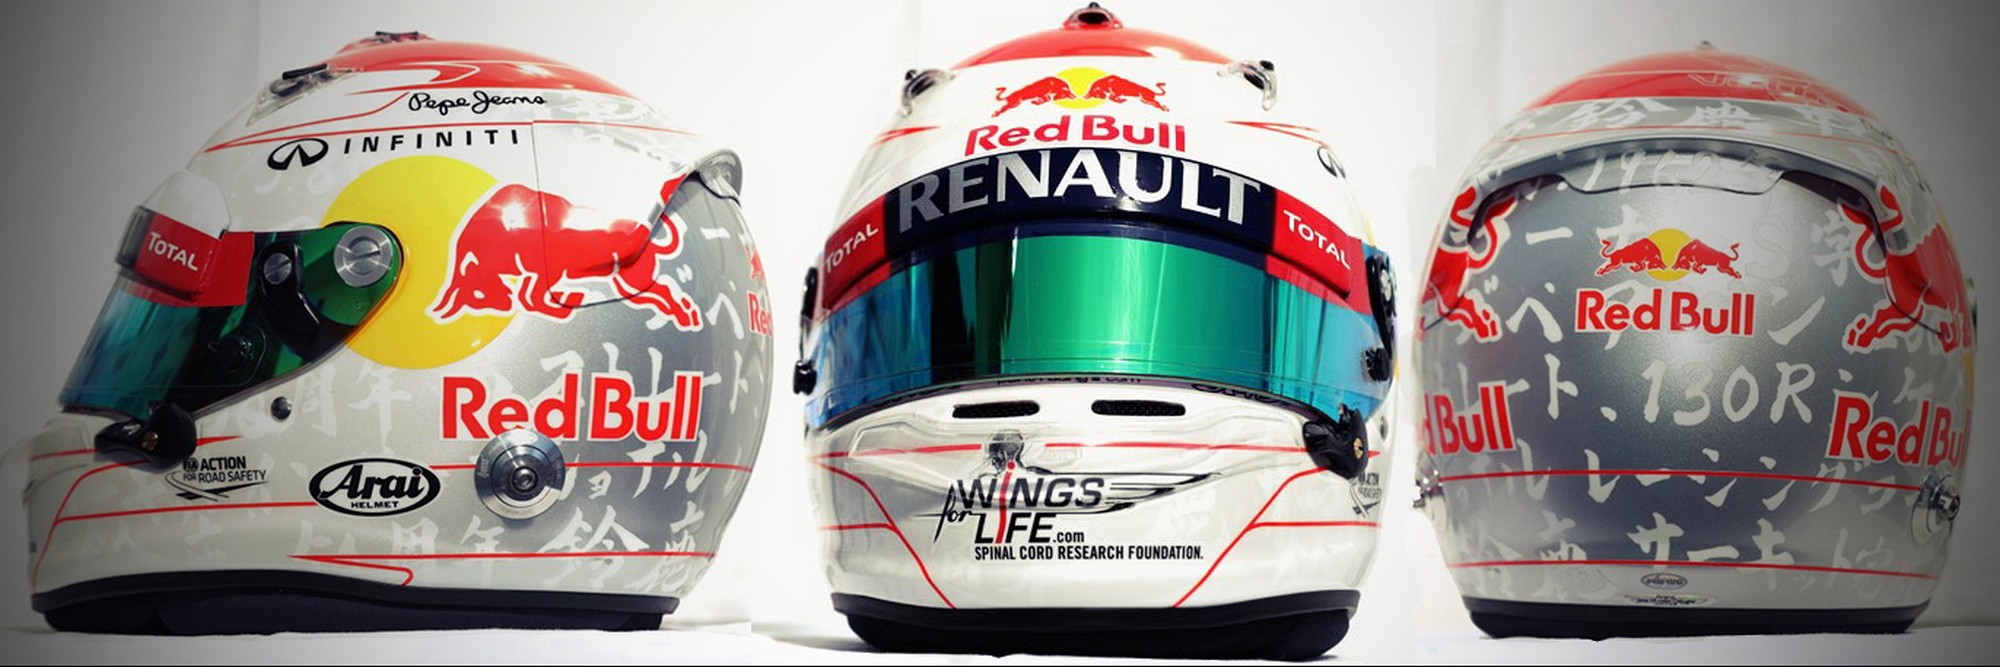 Шлем Себастьяна Феттеля на Гран-При Японии 2012 | 2012 Japanese Grand Prix helmet of Sebastian Vettel